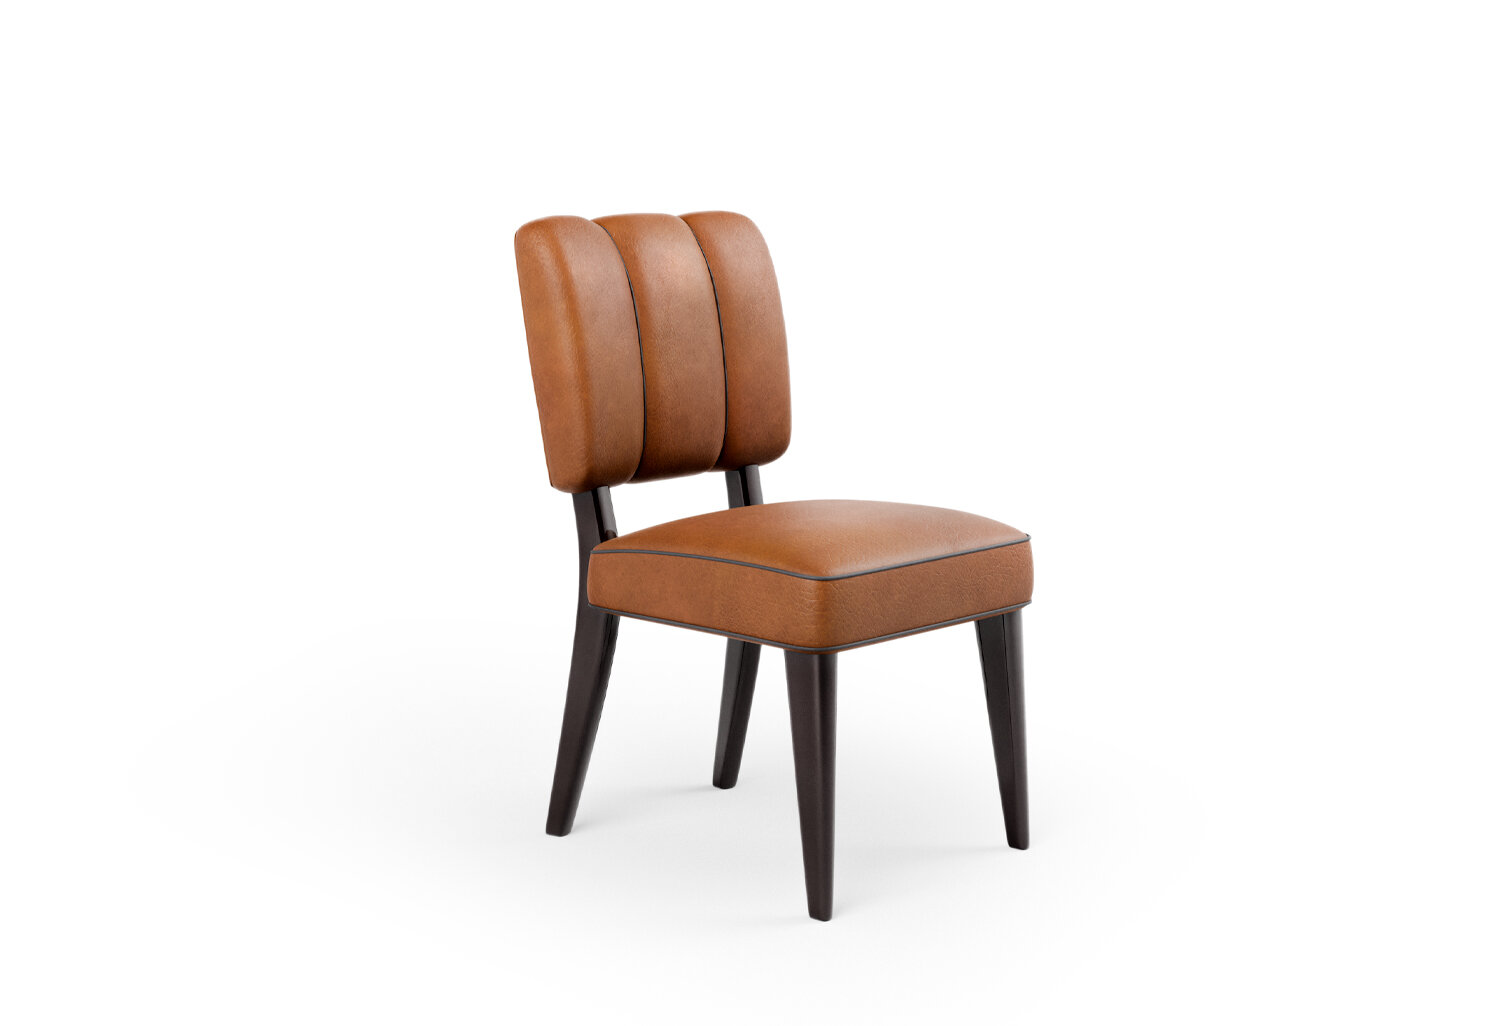 Pierre Chair (Copy)